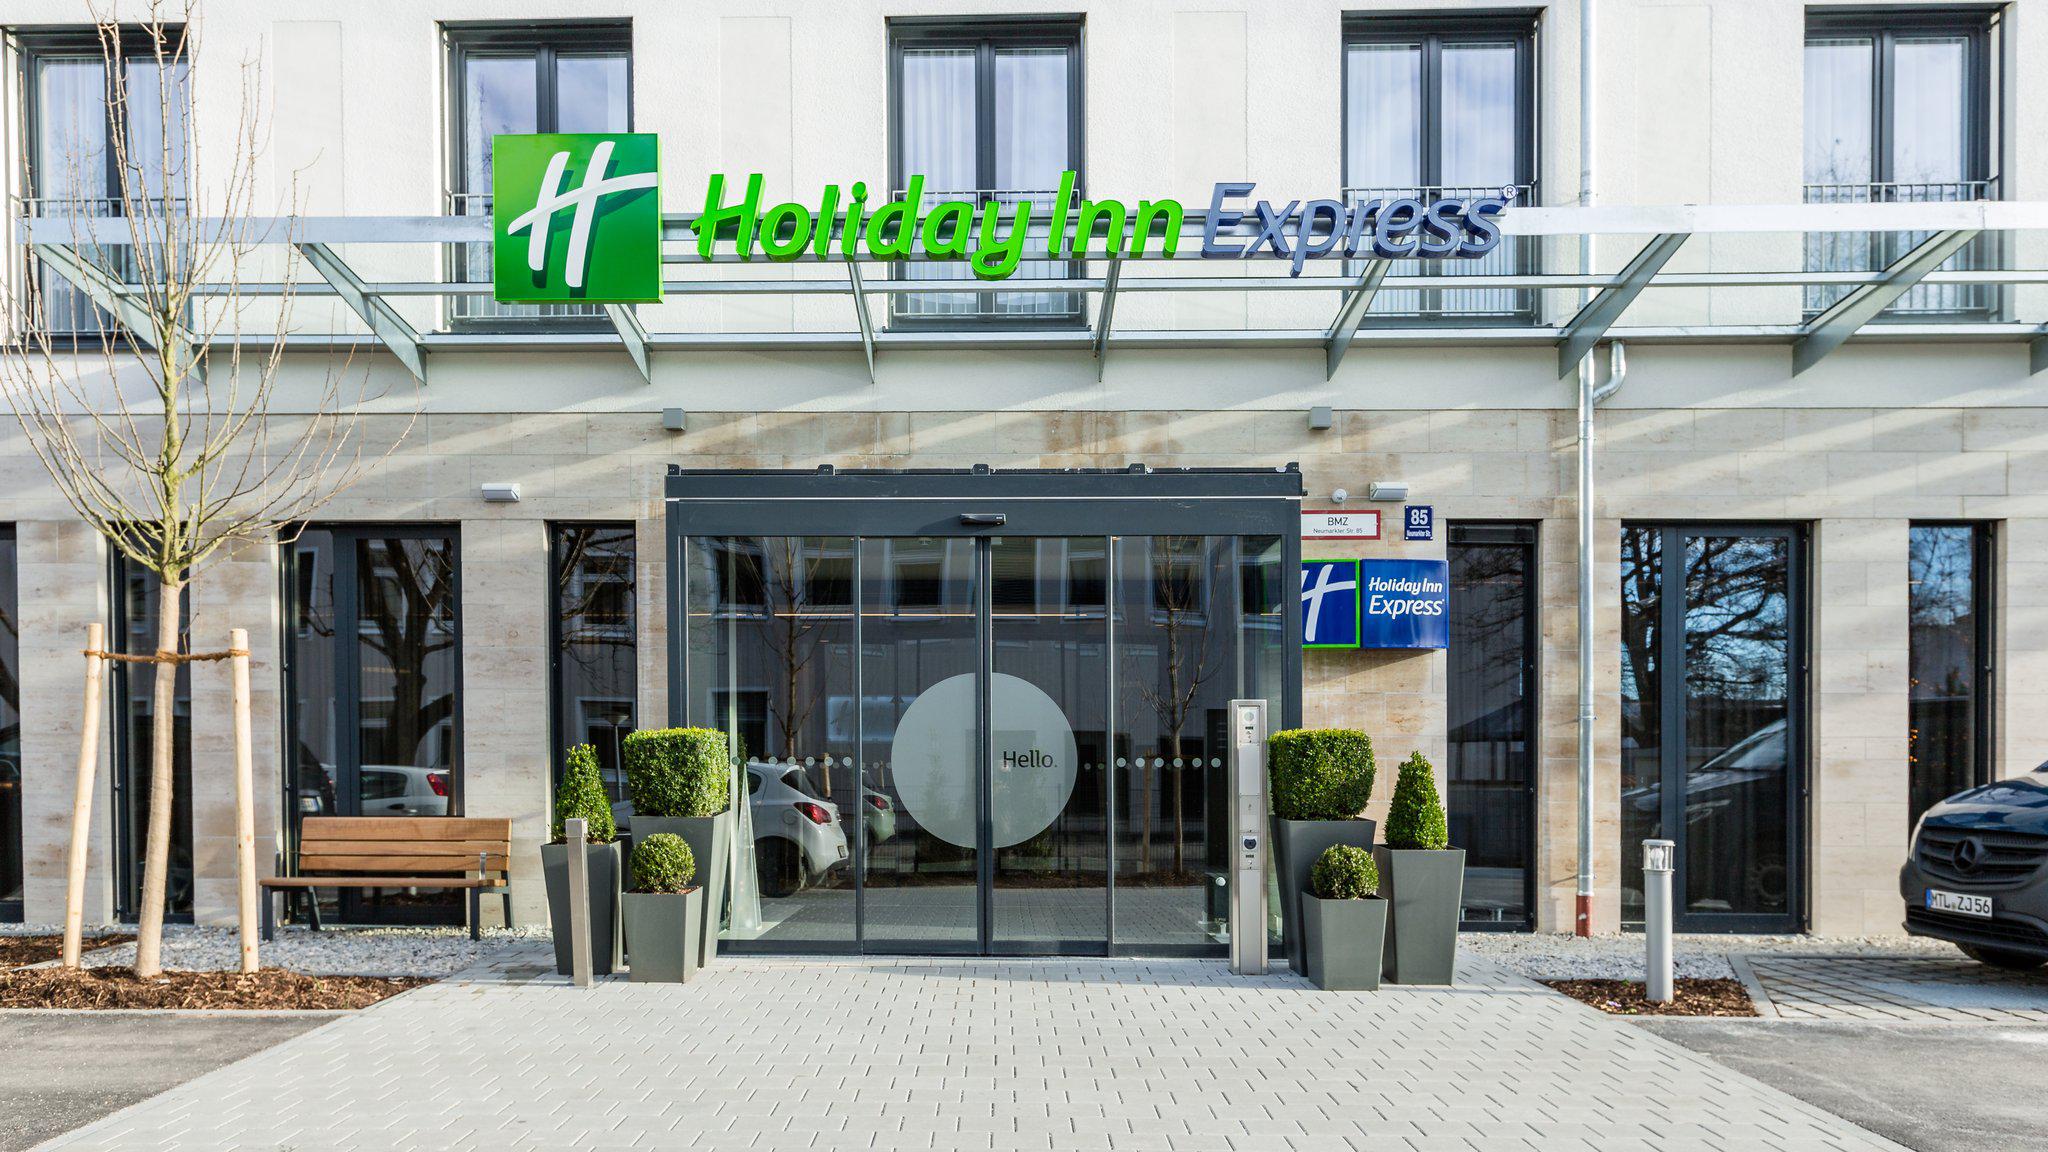 Holiday Inn Express Munich - City East, an IHG Hotel, Neumarkter Strasse 85B in München